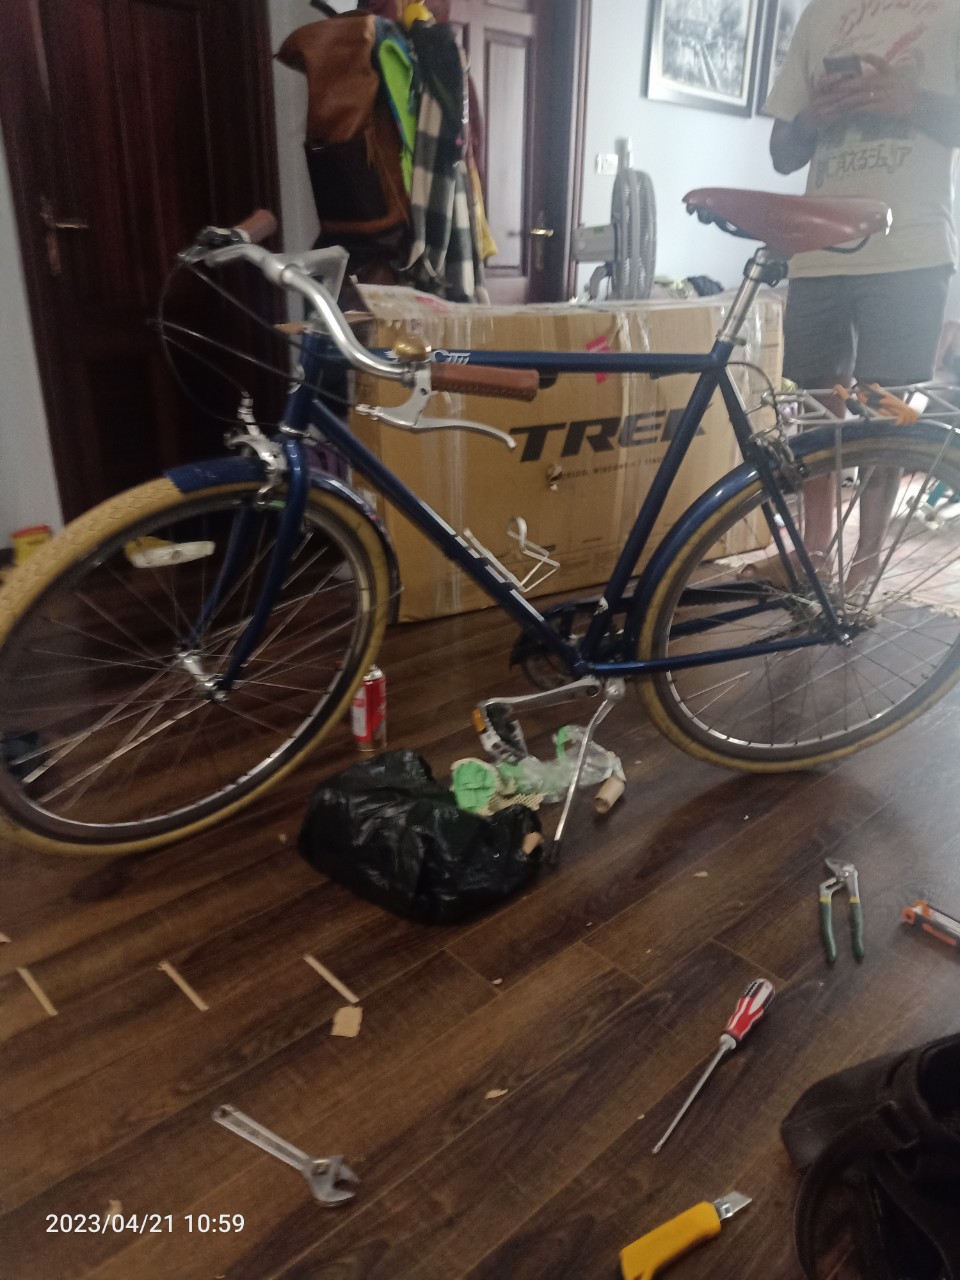 Bicycle assembling